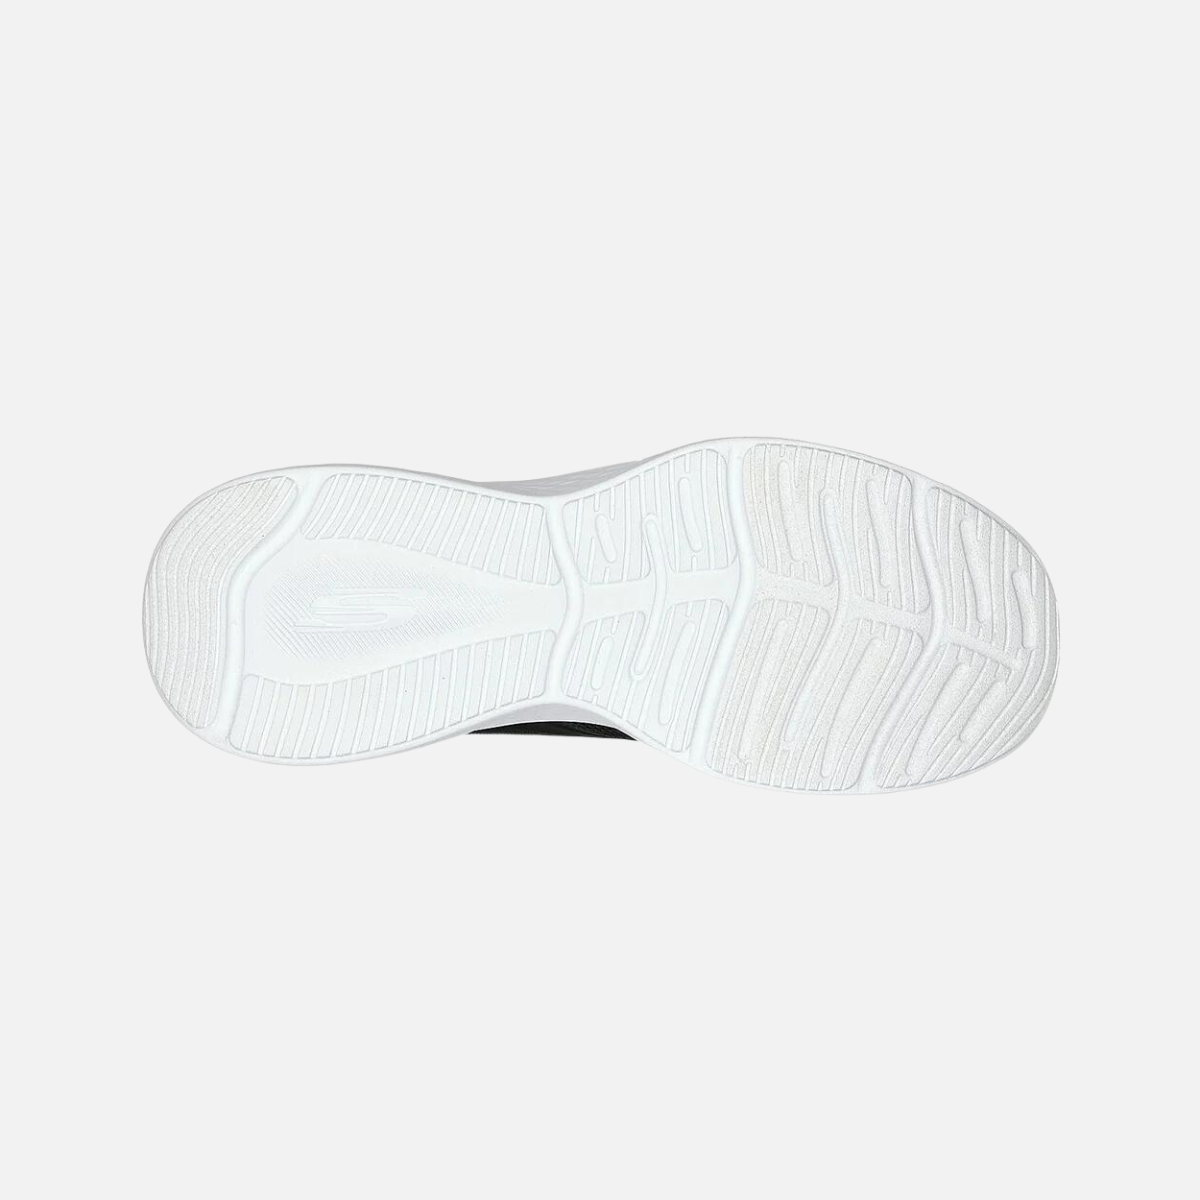 Skechers Skech-lite Pro Century Men's Lifrstyle Shoes -Black/White